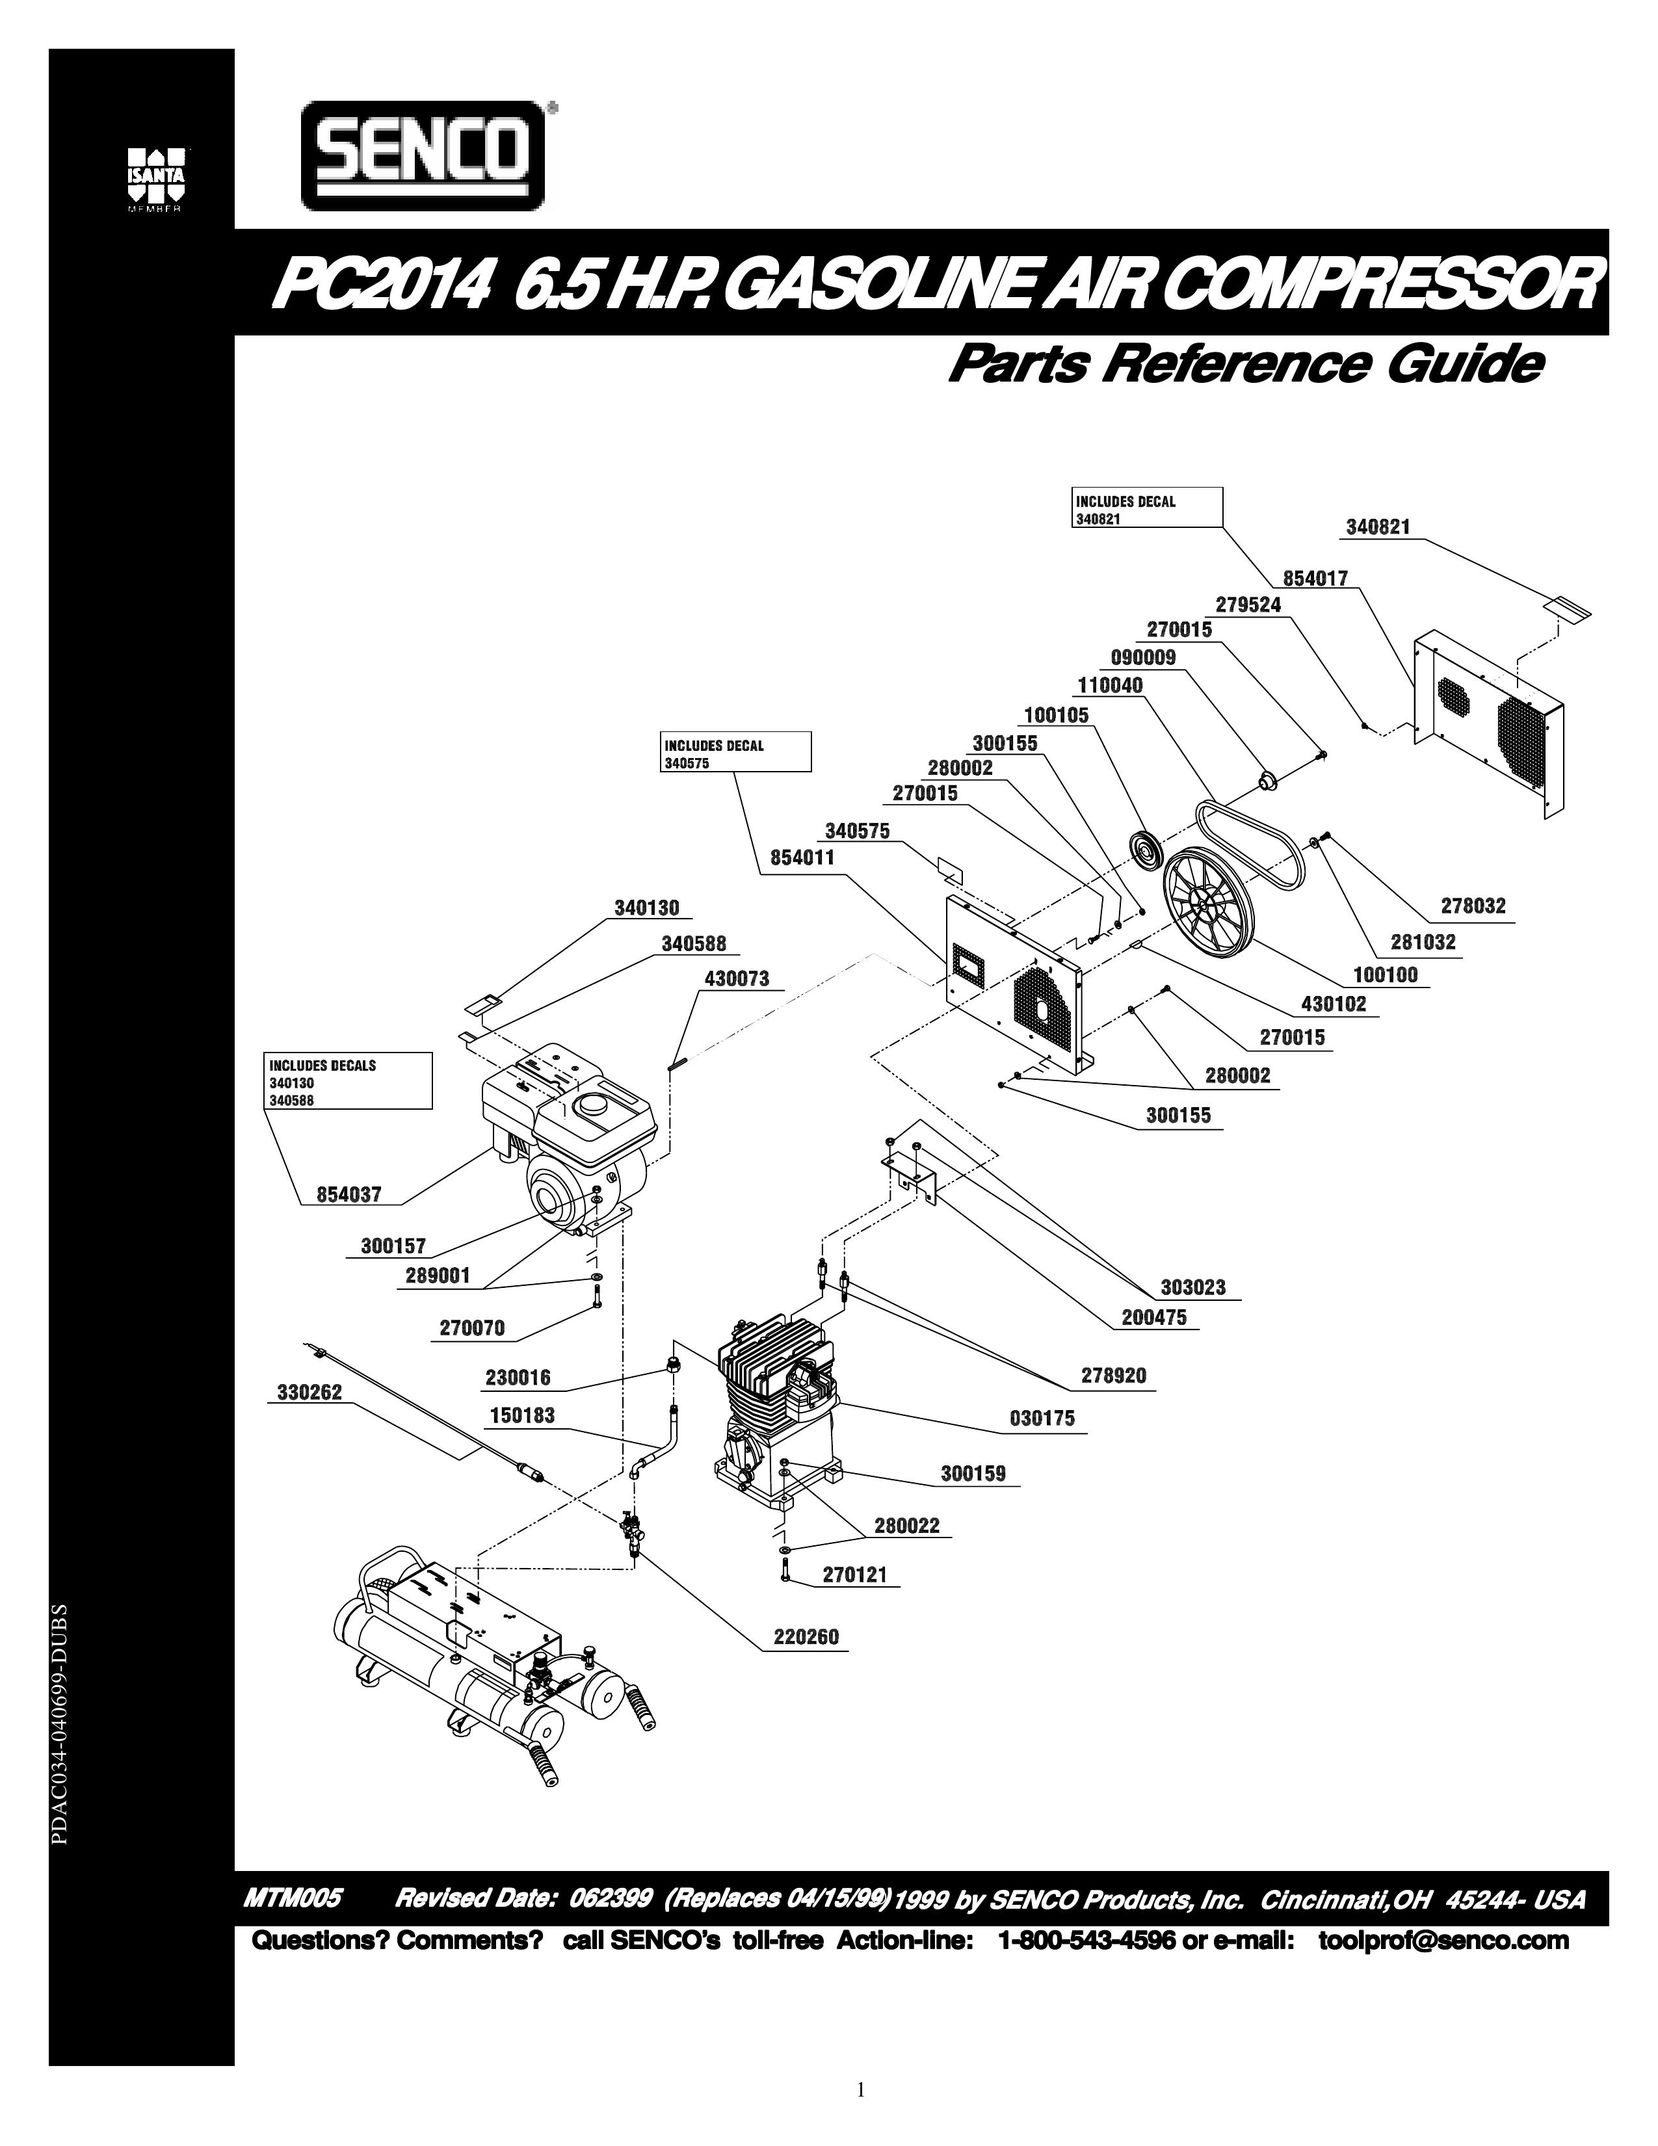 Senco PC2014 Air Compressor User Manual